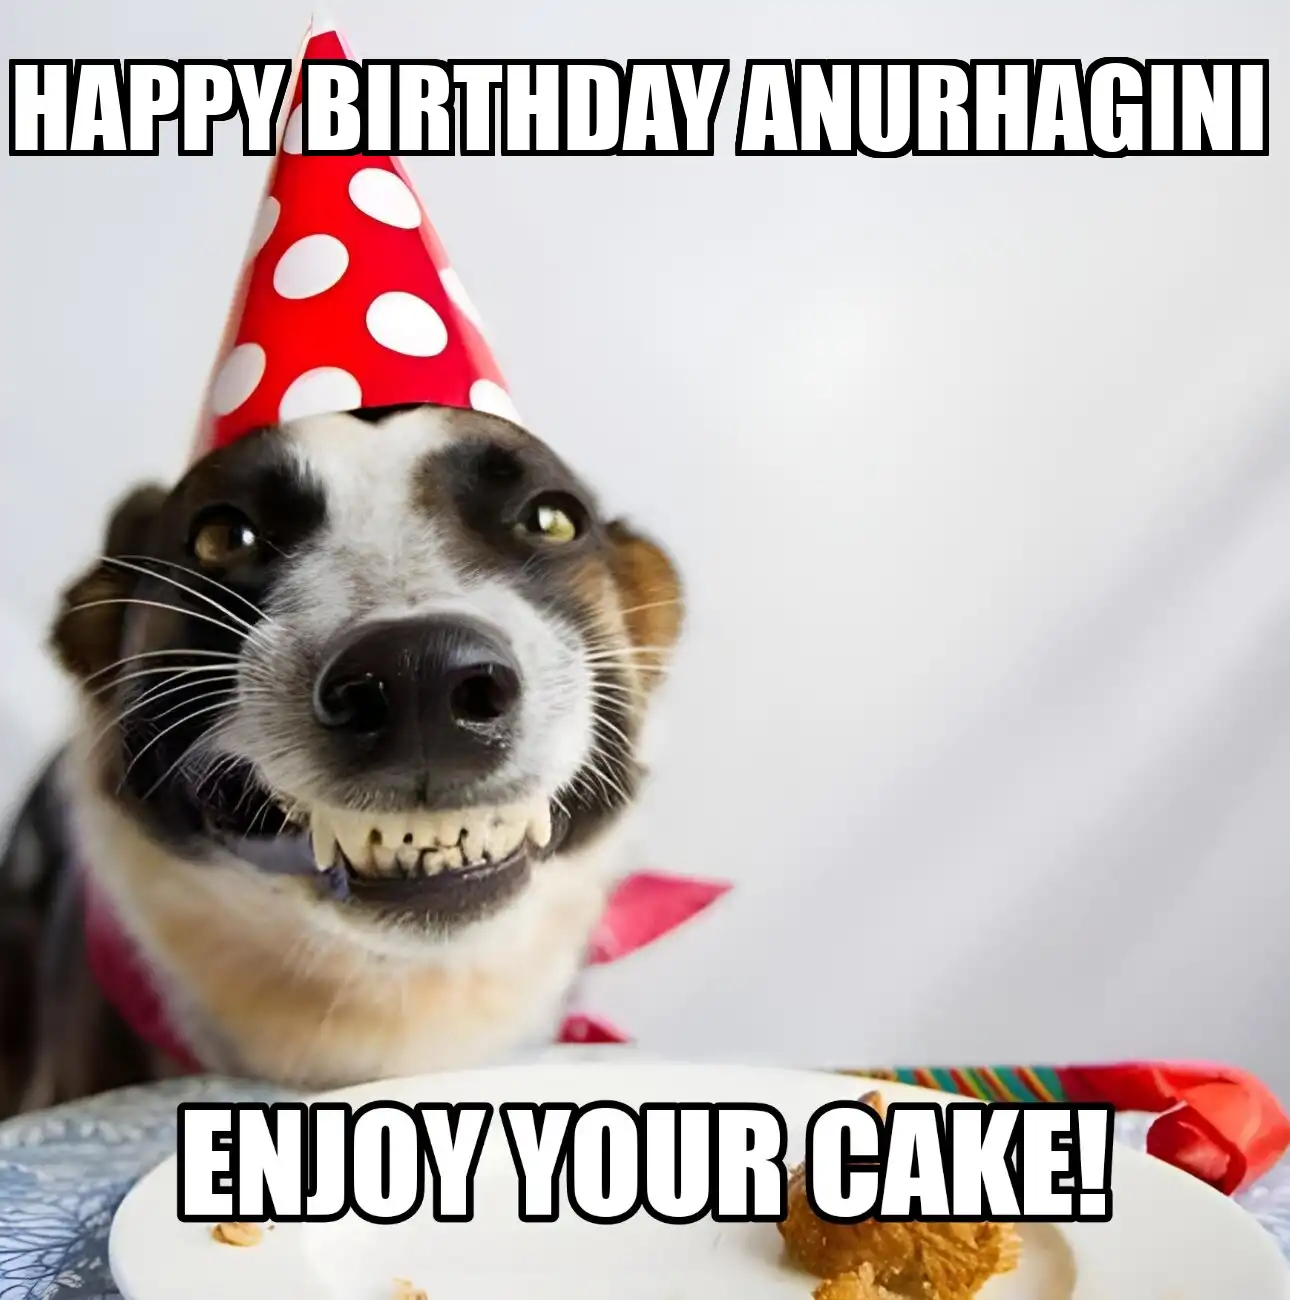 Happy Birthday Anurhagini Enjoy Your Cake Dog Meme